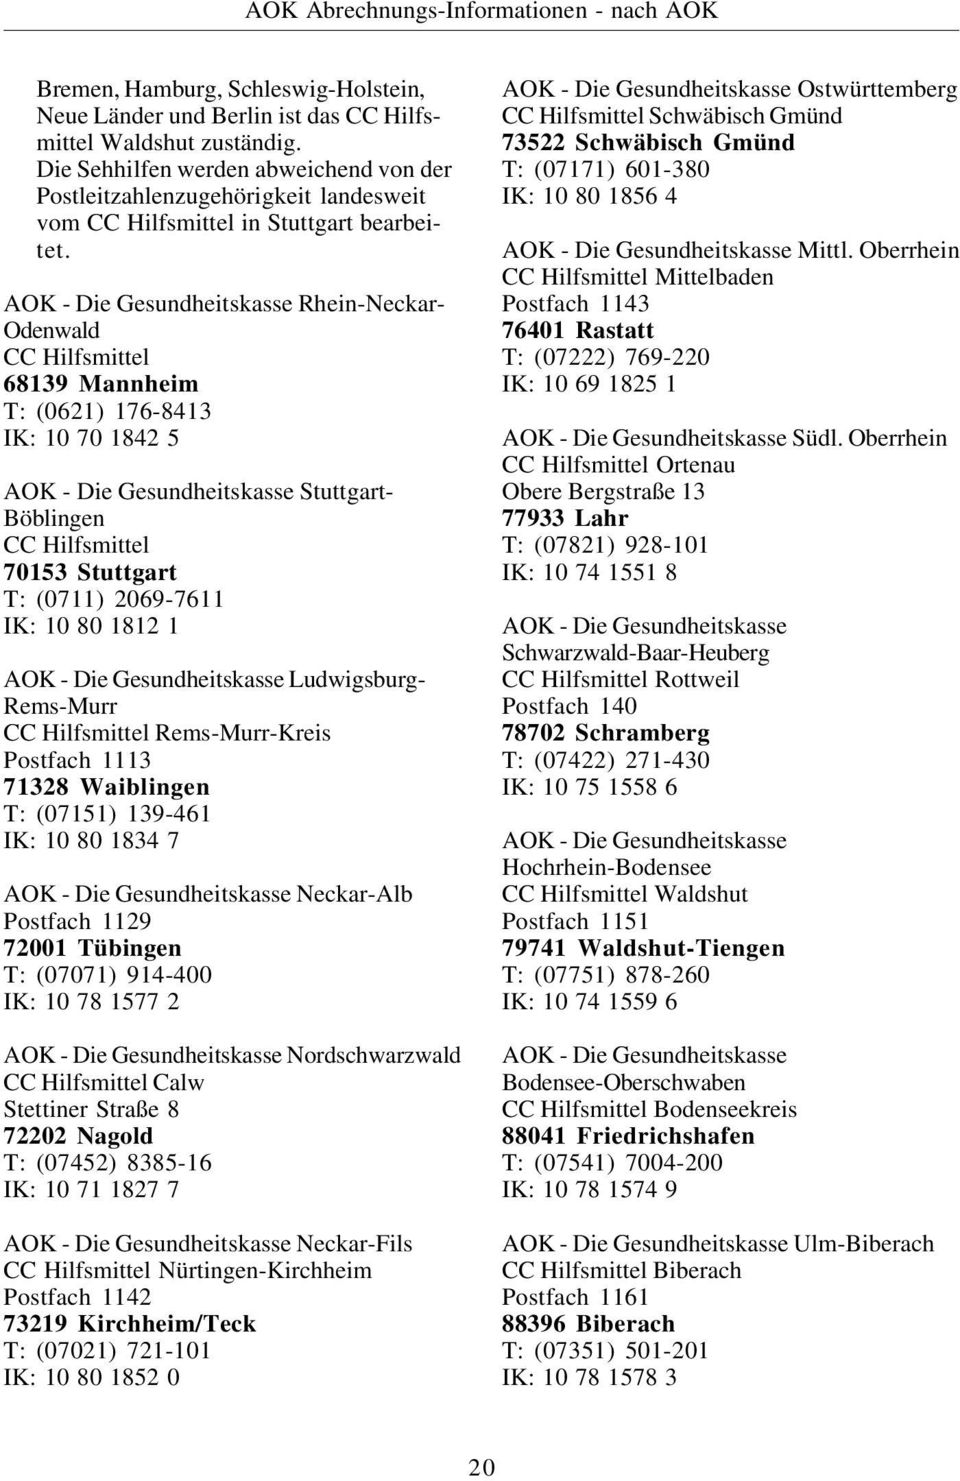 Rhein-Neckar- Odenwald CC Hilfsmittel 68139 Mannheim T: (0621) 176-8413 IK: 10 70 1842 5 Stuttgart- Böblingen CC Hilfsmittel 70153 Stuttgart T: (0711) 2069-7611 IK: 10 80 1812 1 Ludwigsburg-